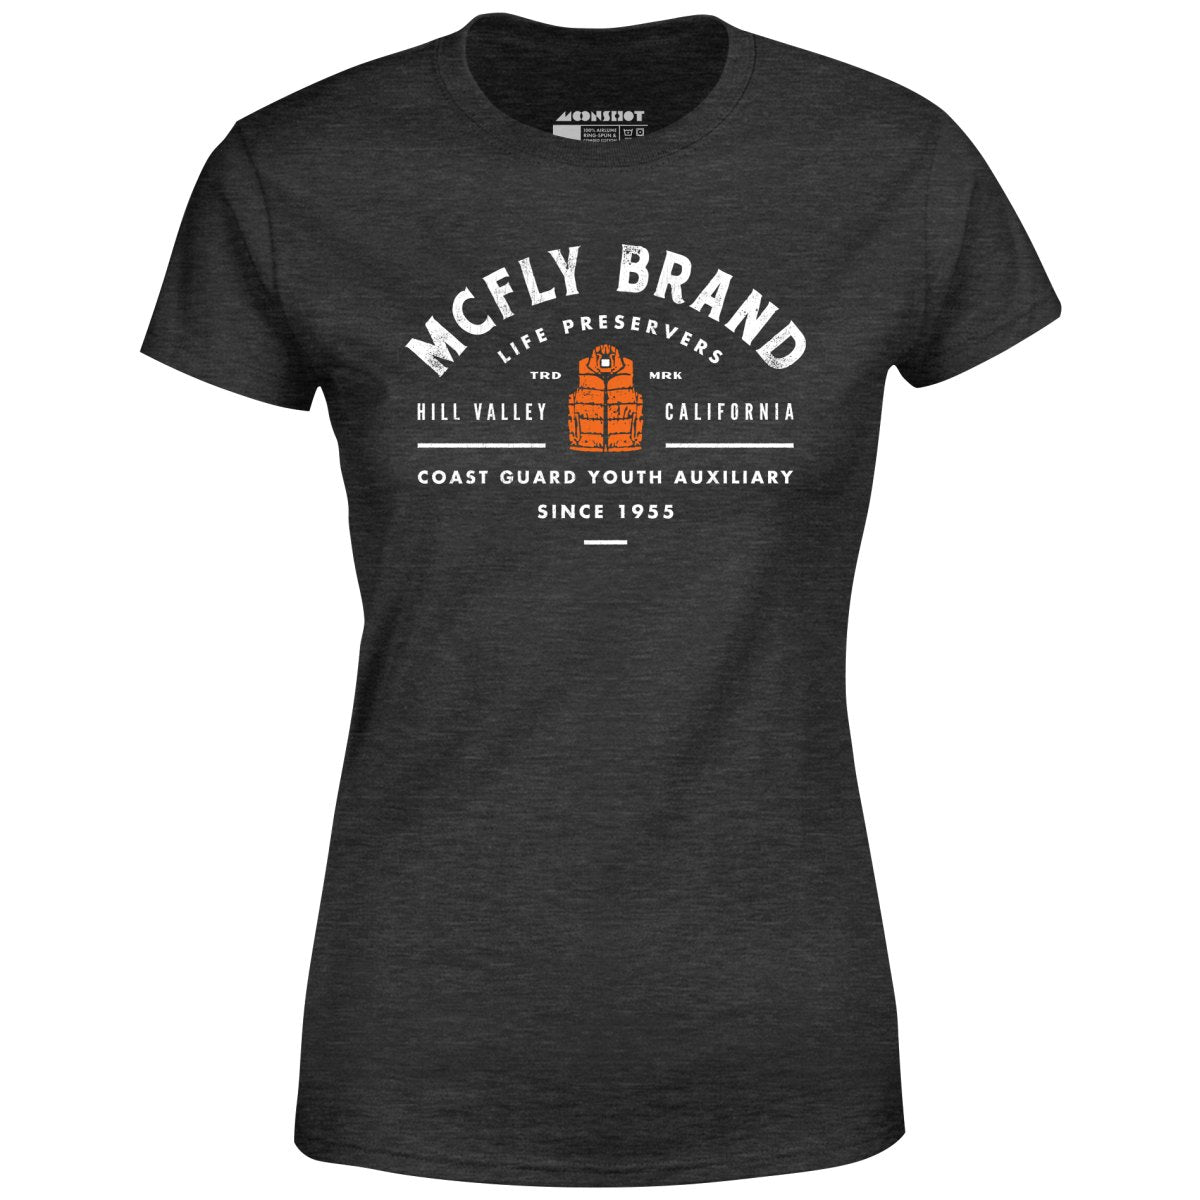 McFly Brand Life Preservers - Women's T-Shirt